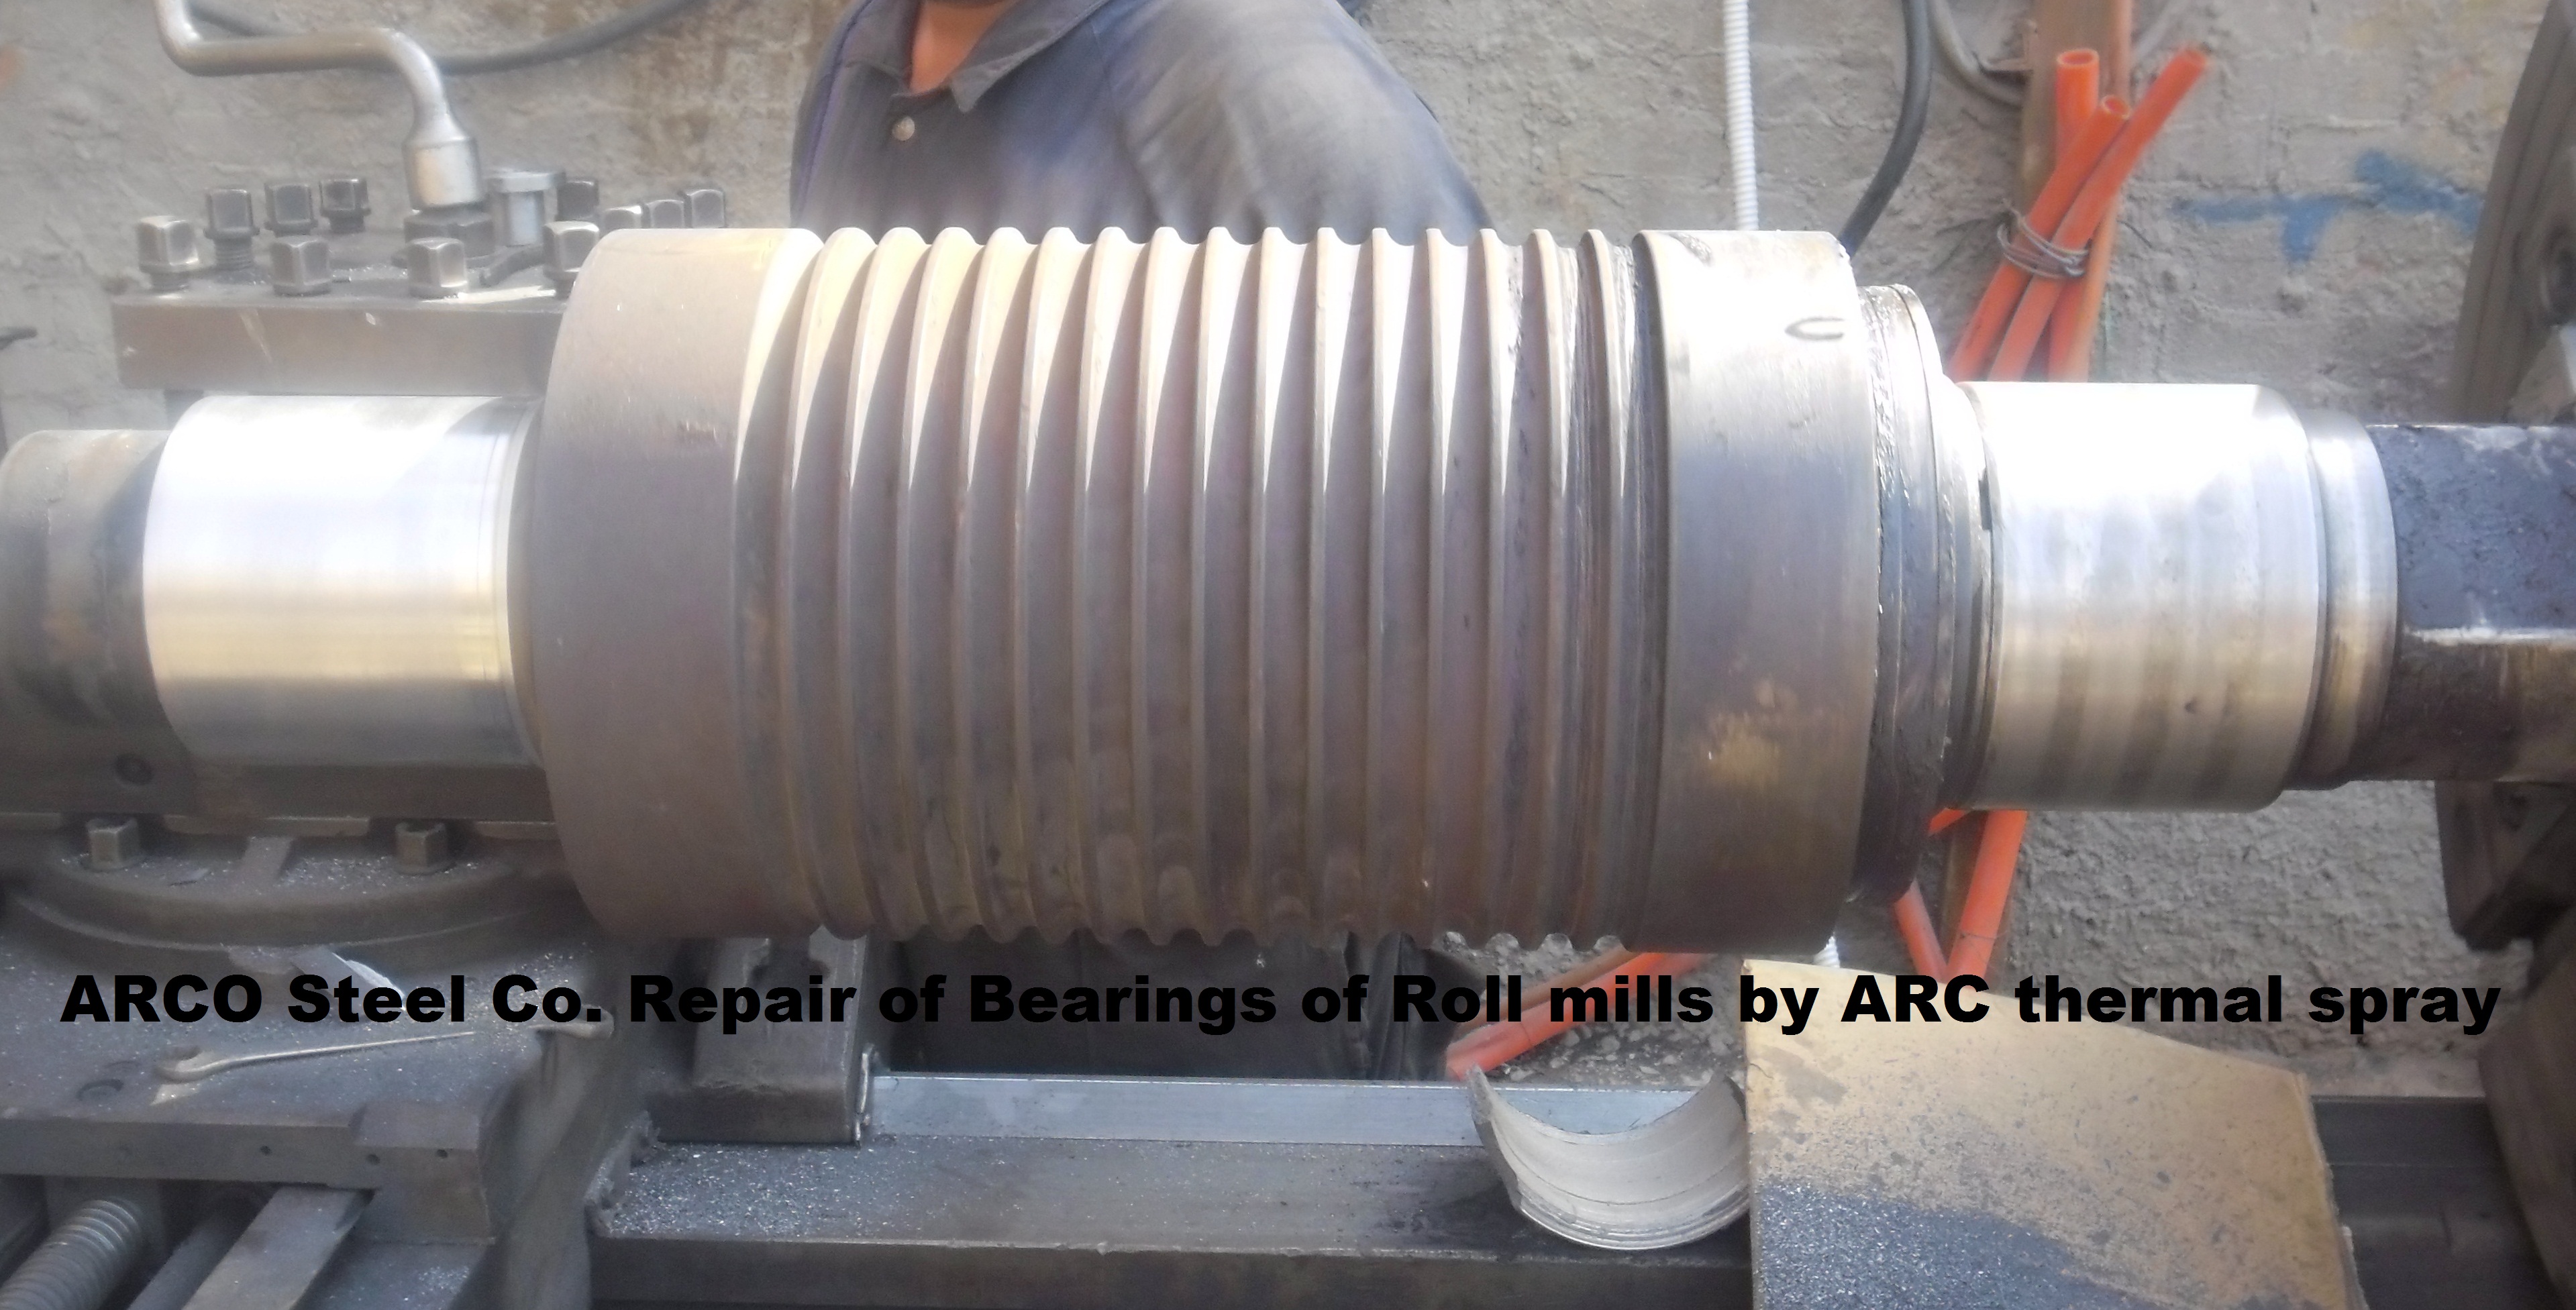 REPAIRING OF STEEL ROLLERS BY ARC SPRAY OF ARCO STEEL COMPANY